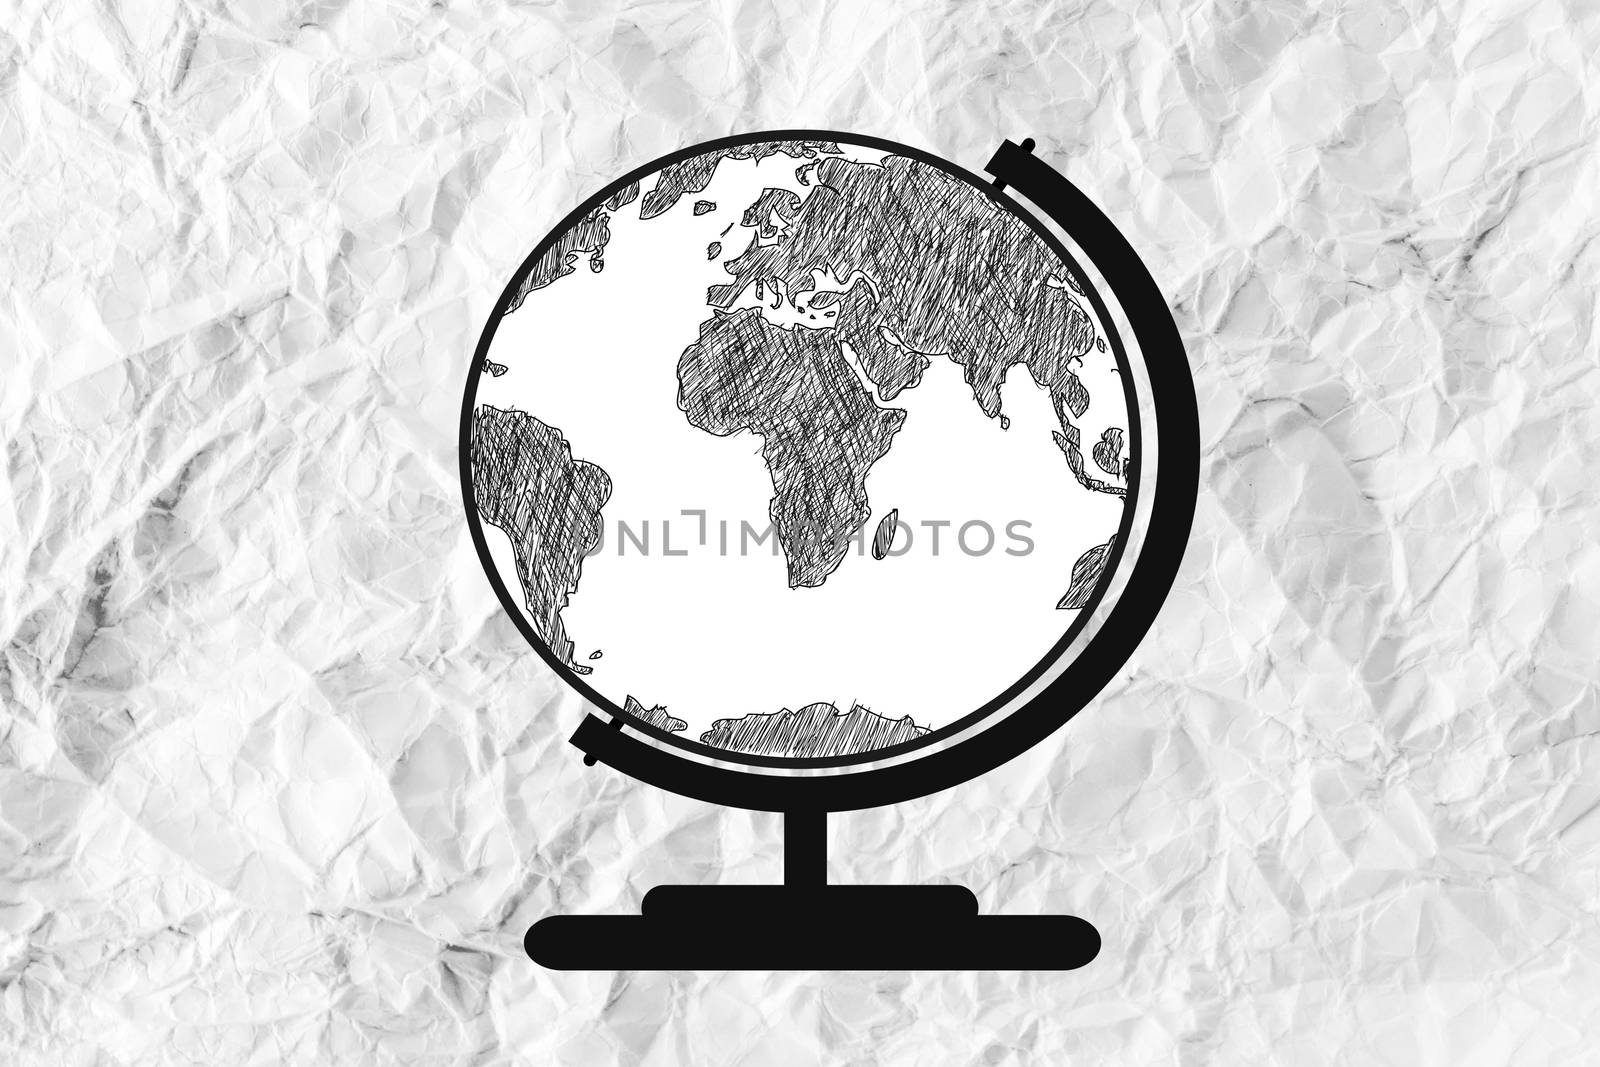 Globe earth icons themes idea design by kiddaikiddee